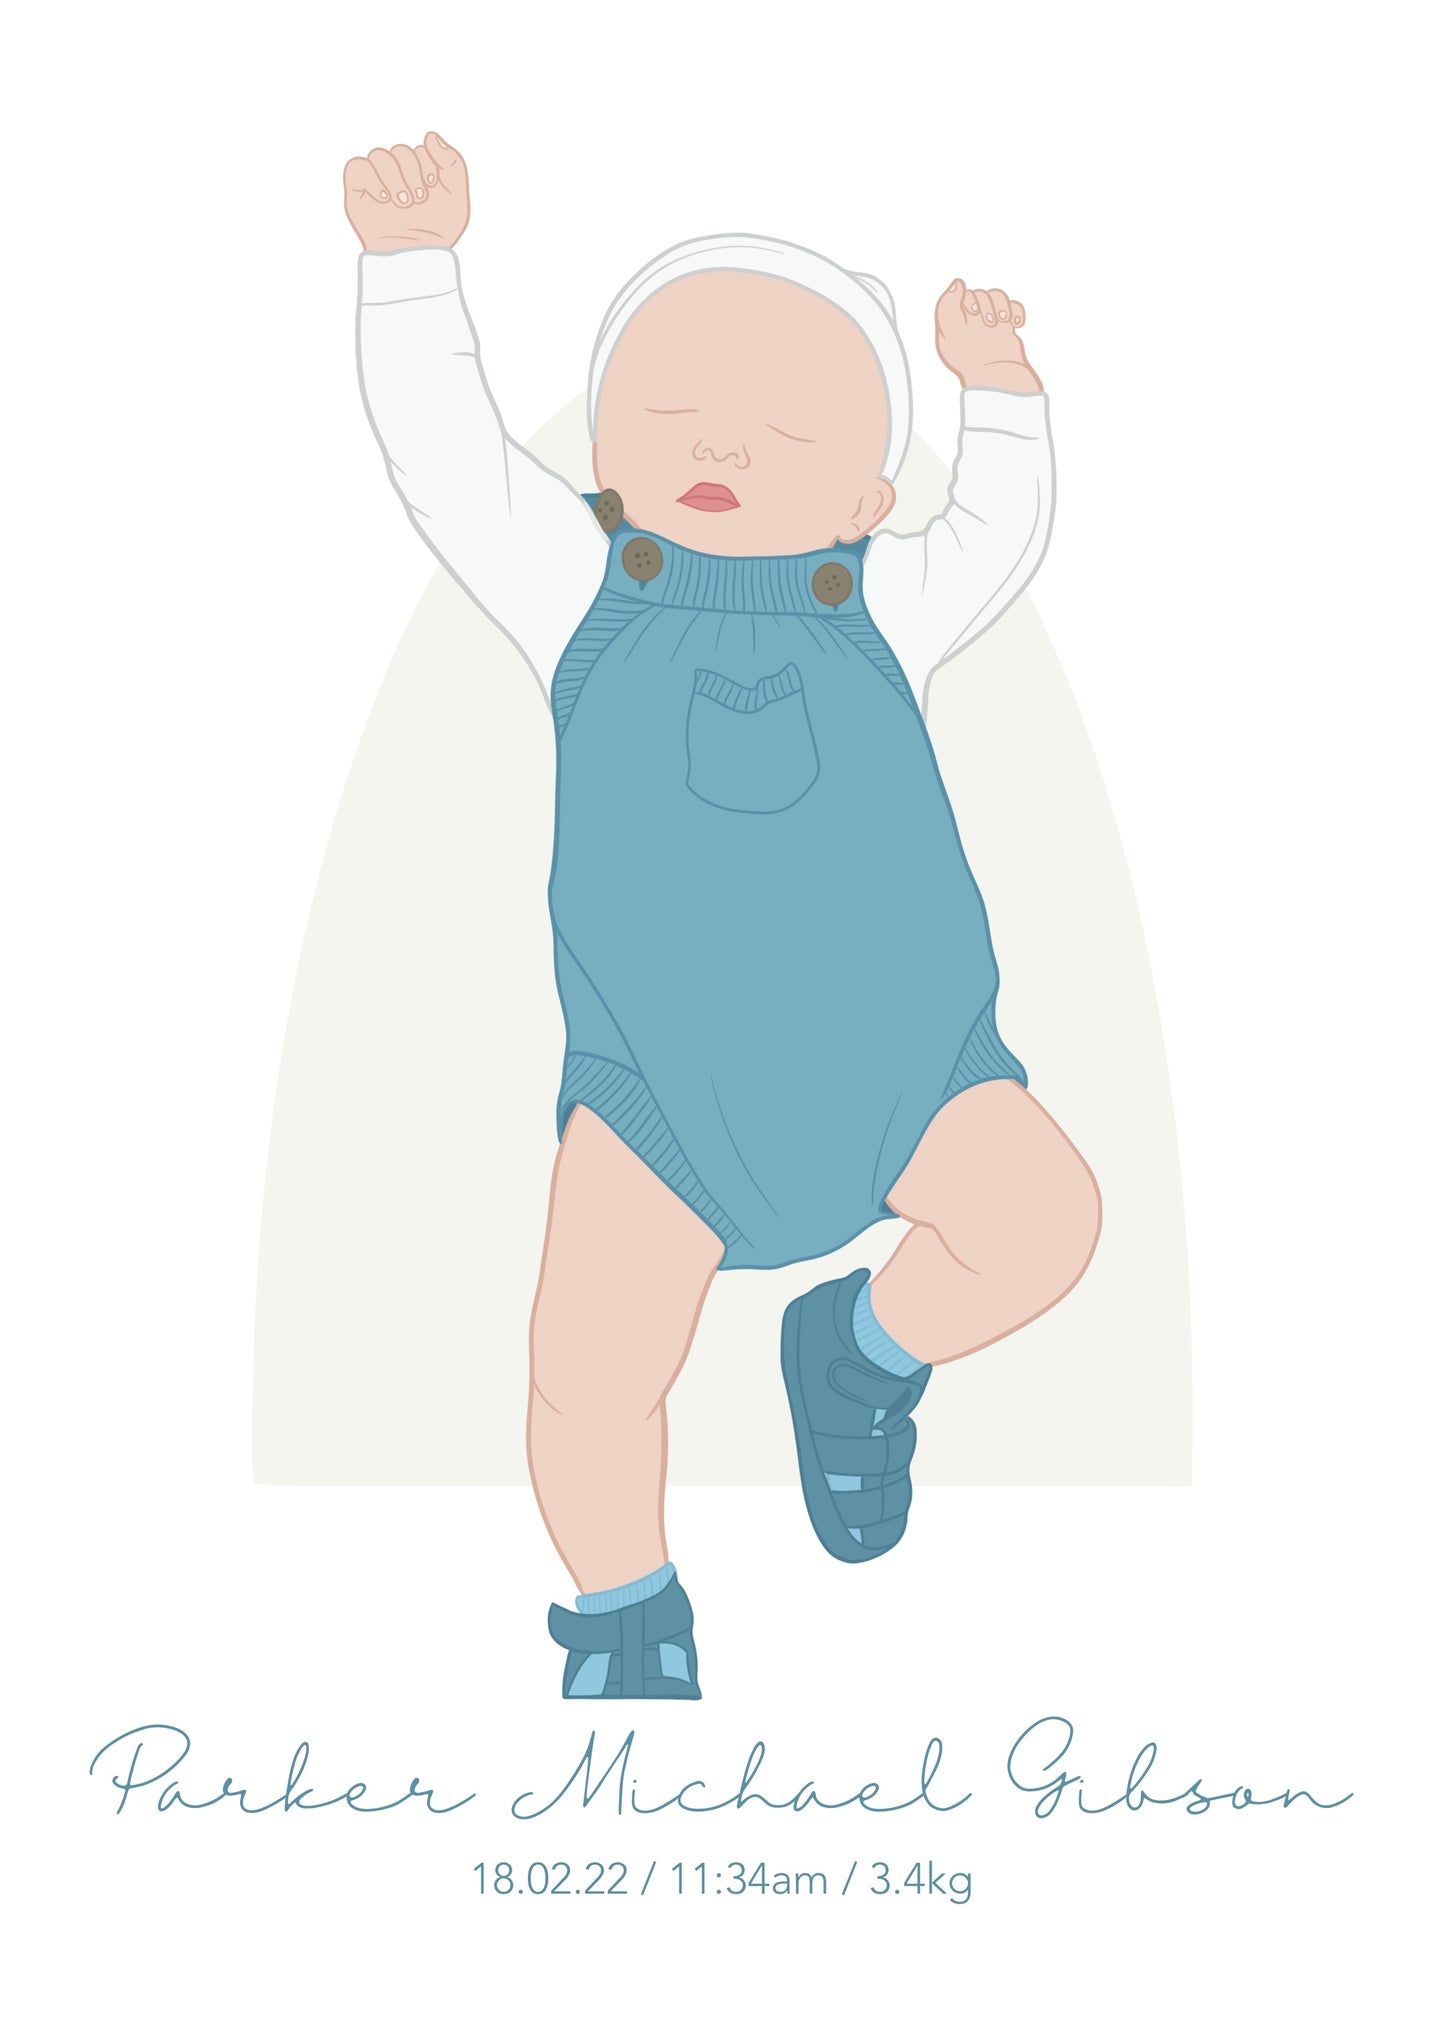 Custom Newborn Illustration - Coloured with arch